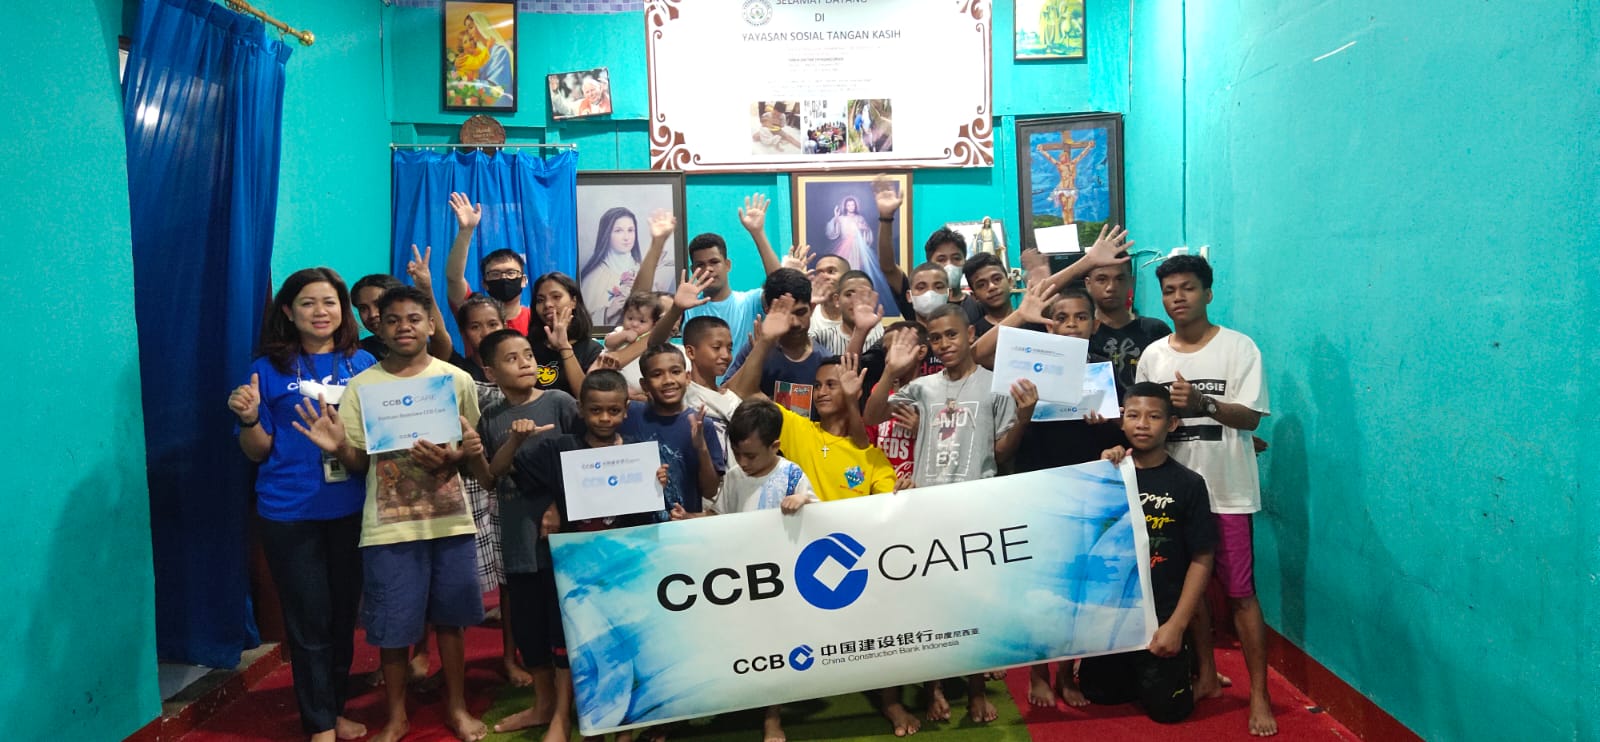 CCB Indonesia Care - Bantuan Pendidikan Panti Asuhan Tangan Kasih